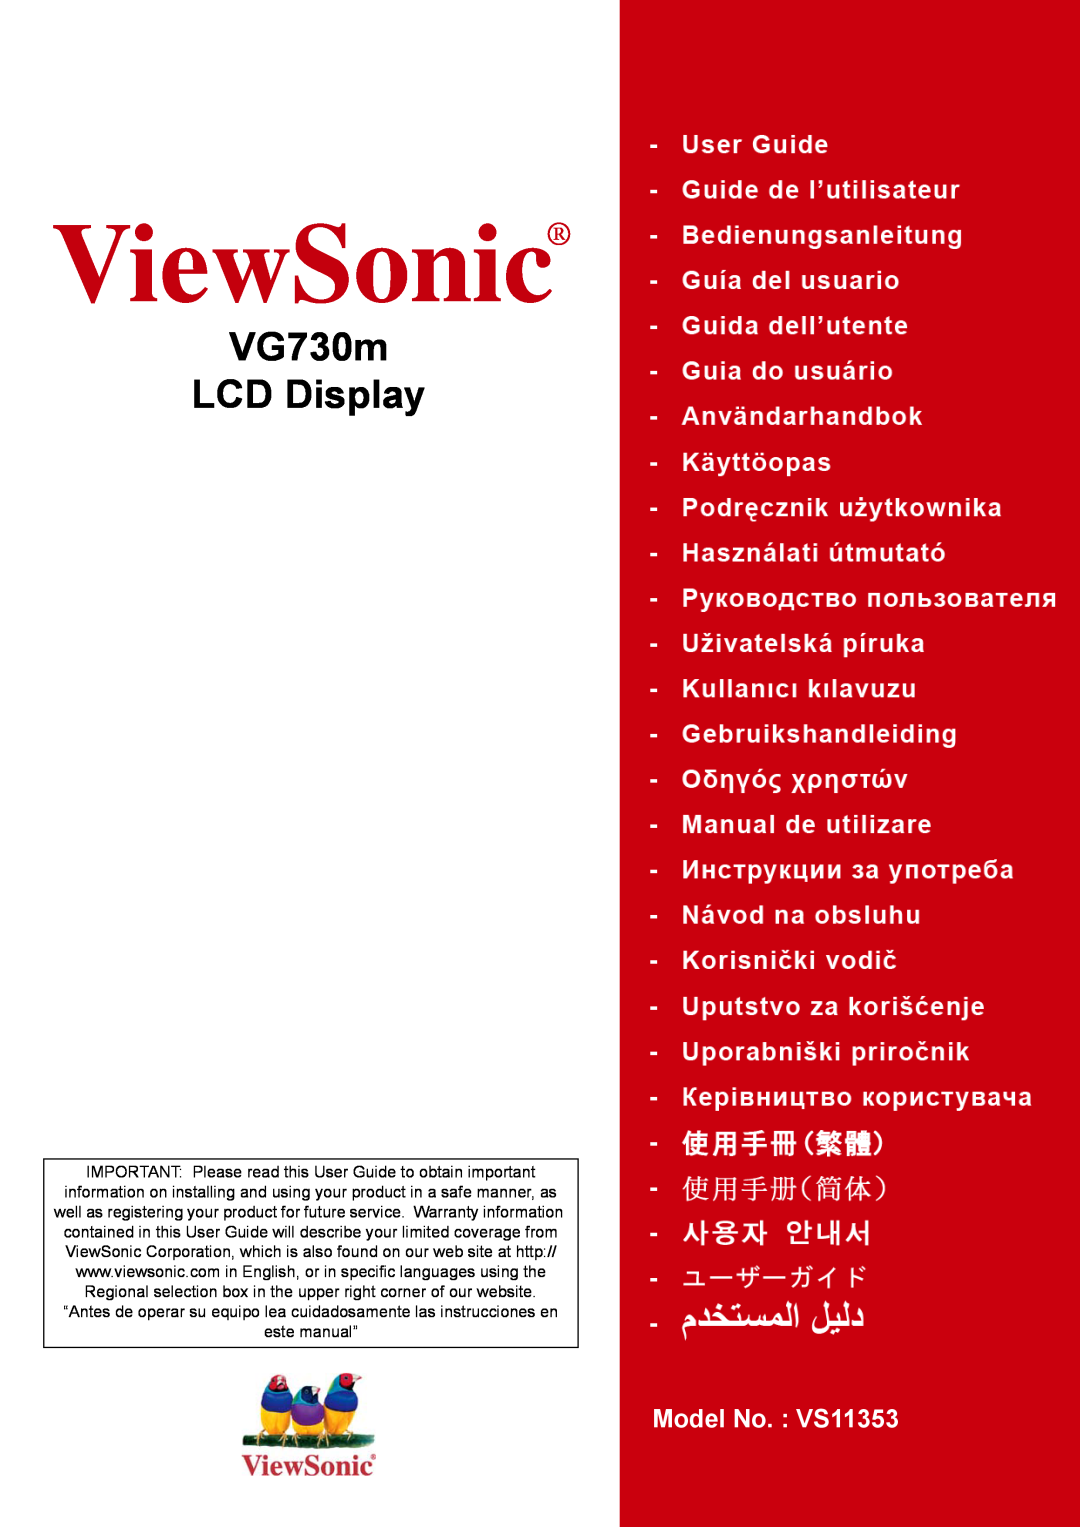 ViewSonic VG730M warranty ViewSonic, VG730m LCD Display, Model No. VS11353 